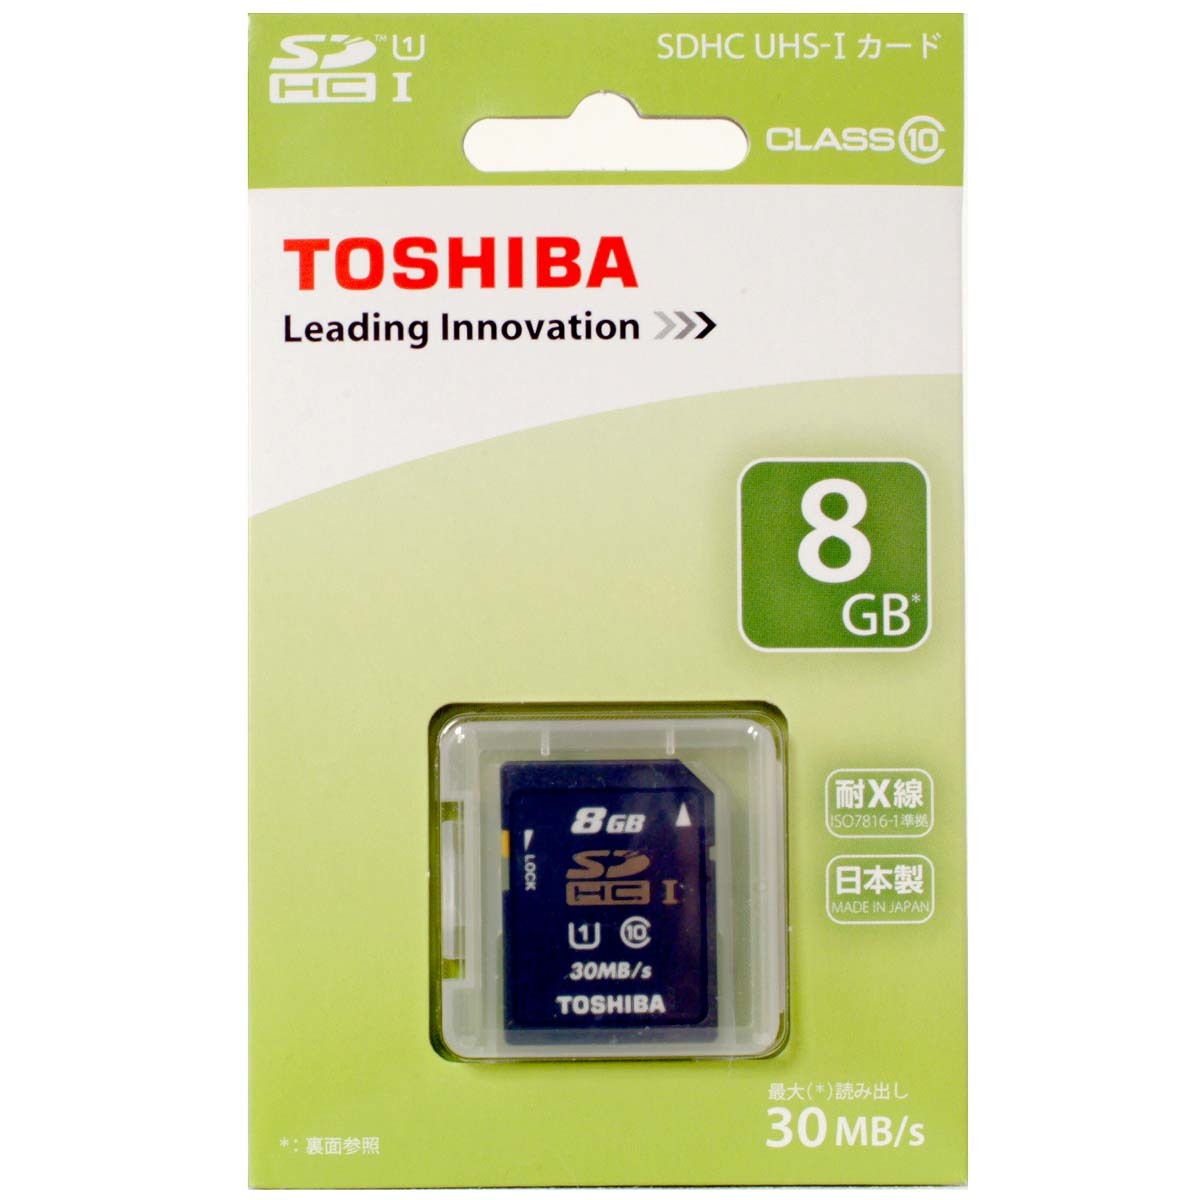 SDHC card [8GB]CLASS10 Toshiba 30MB/s UHS-I correspondence enduring X line [ prompt decision ]TOSHIBA SD-AU008G standard *4562131644448 new goods 